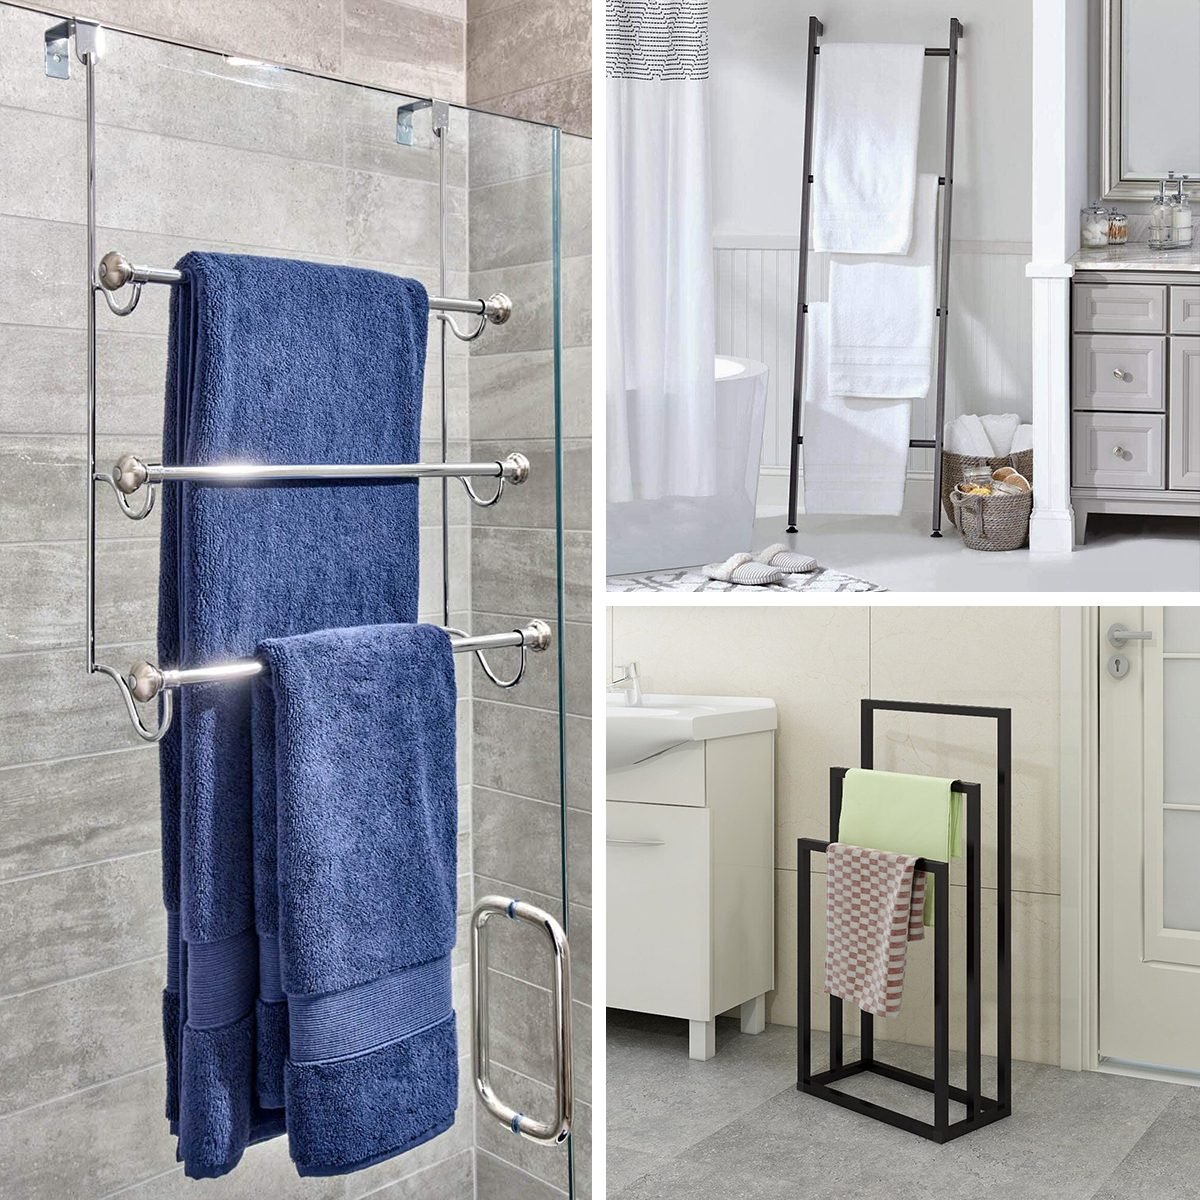 Where to hang towel bar, towel hook : r/interiordecorating